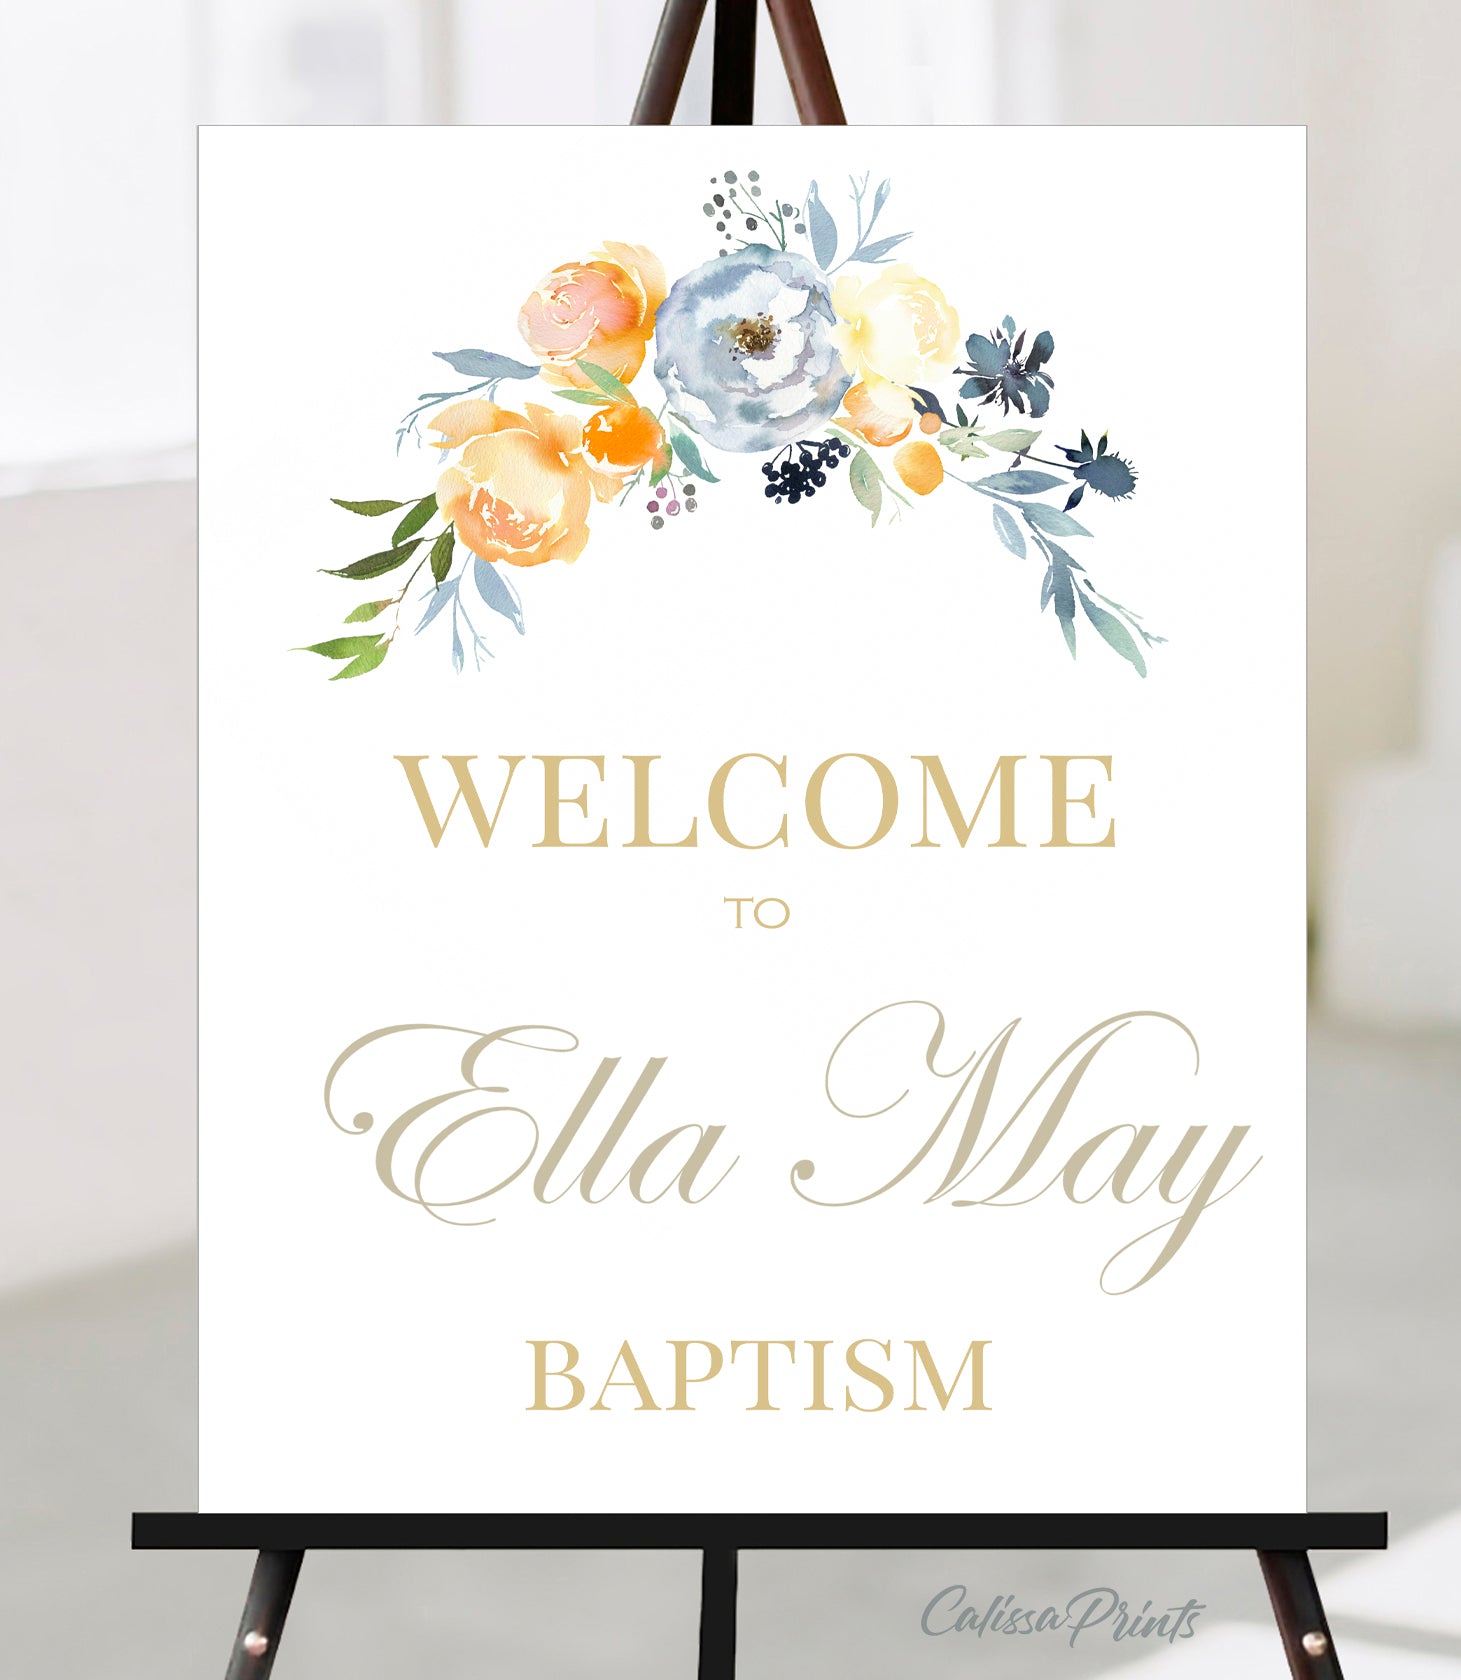 Baptism Party WELCOME Signs Templates - Rose Garden Design, BAPT12 - CalissaPrints